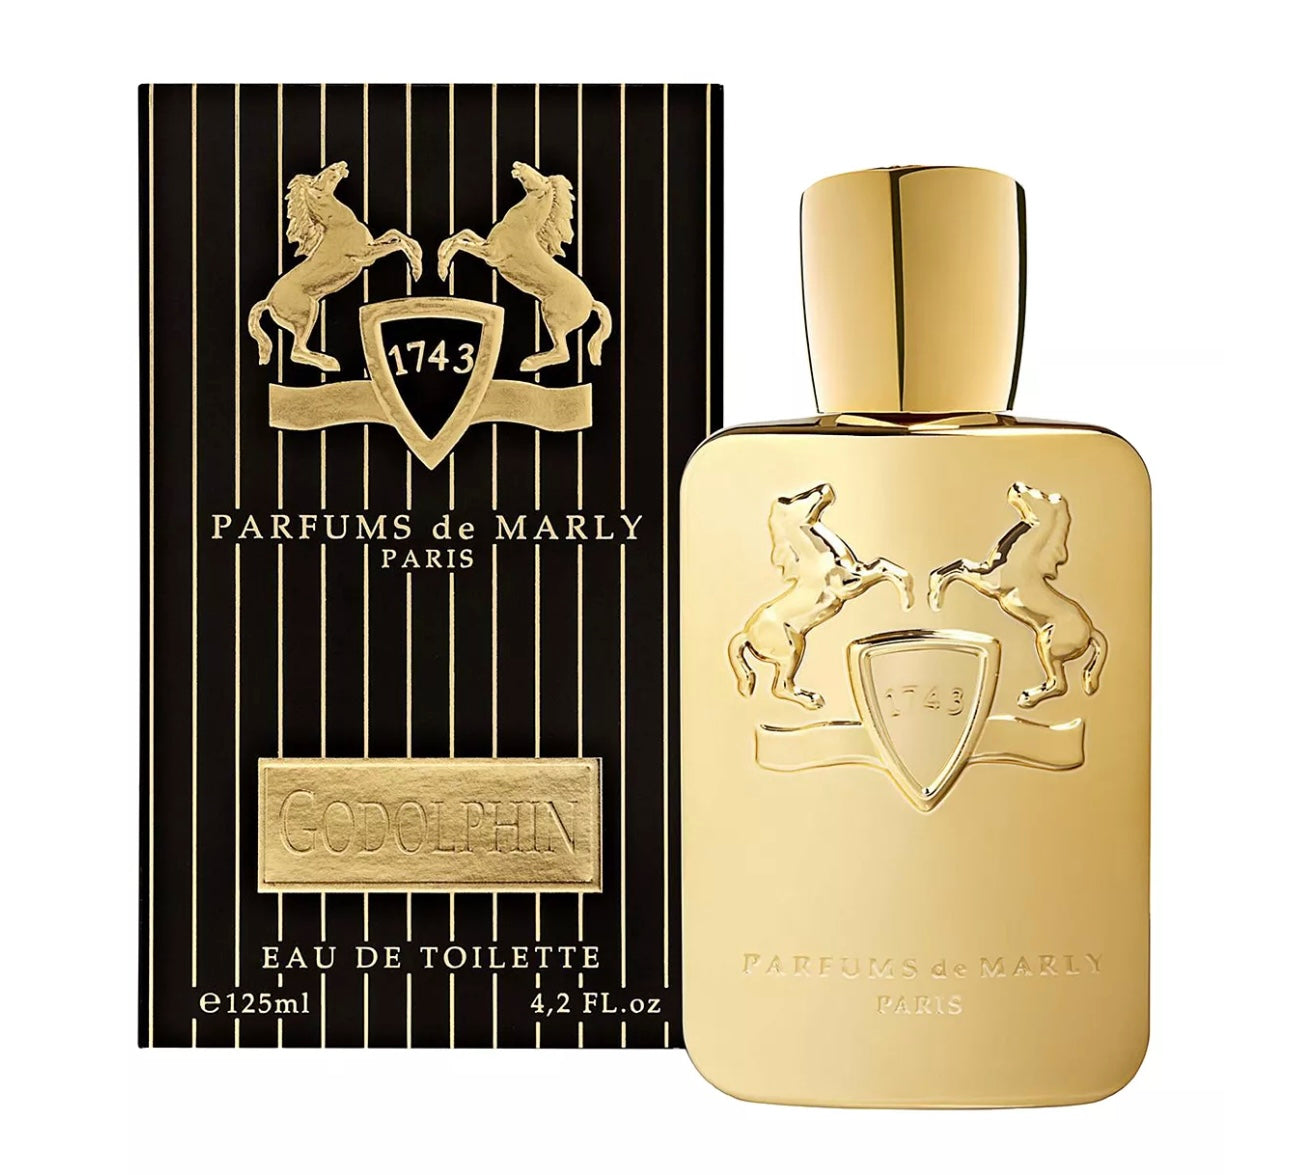 Parfums De Marly “Godolphin”